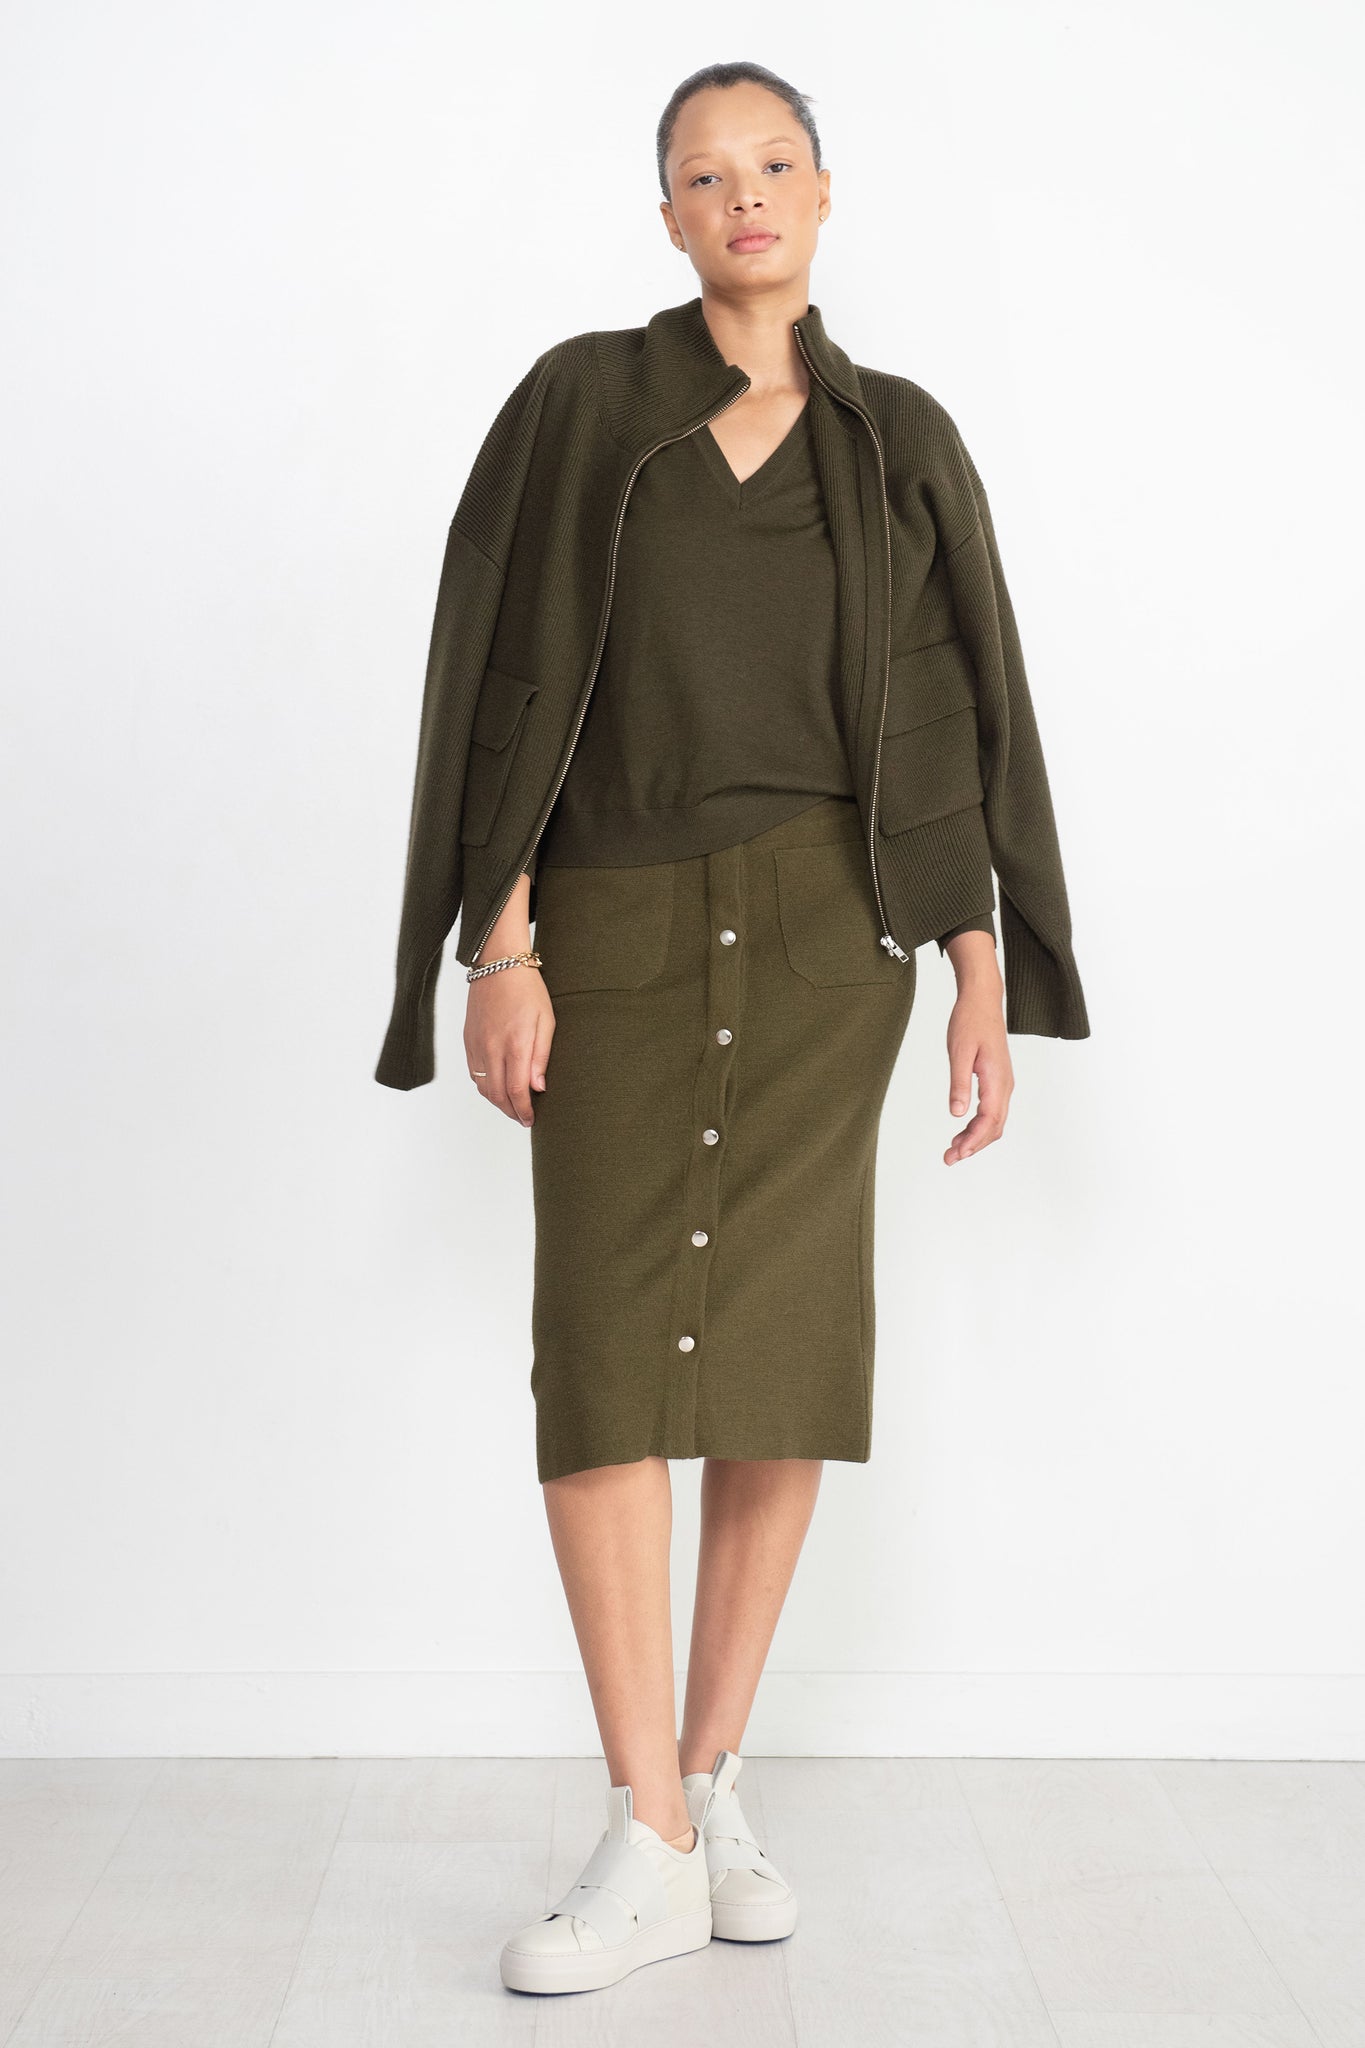 Rachel Comey - Bing Skirt, Olive